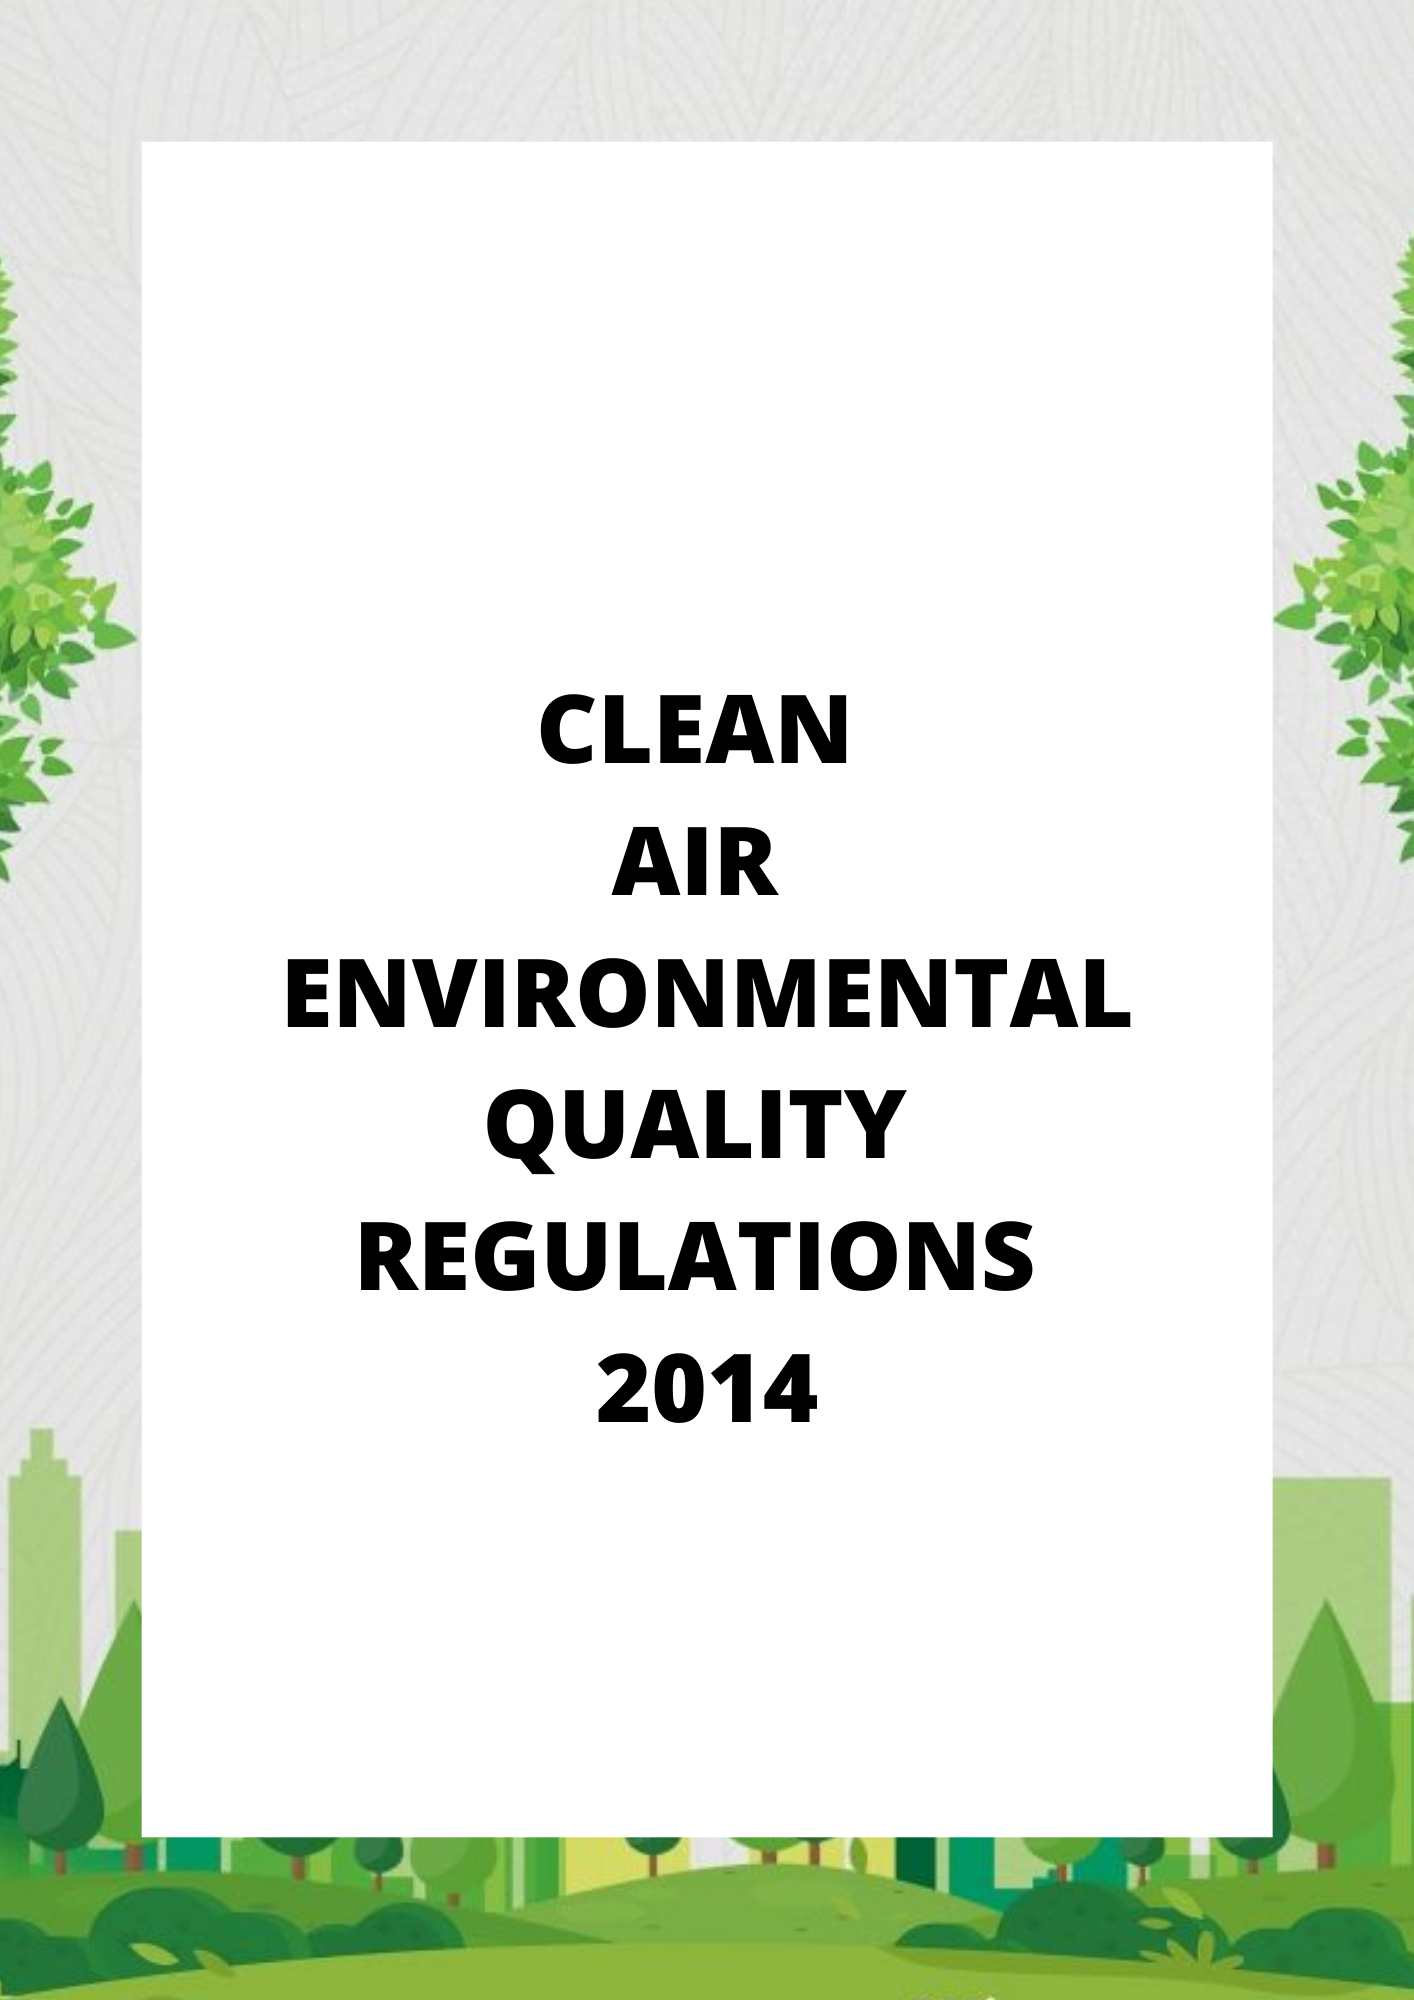 Clean air environmental quality regulations 2014